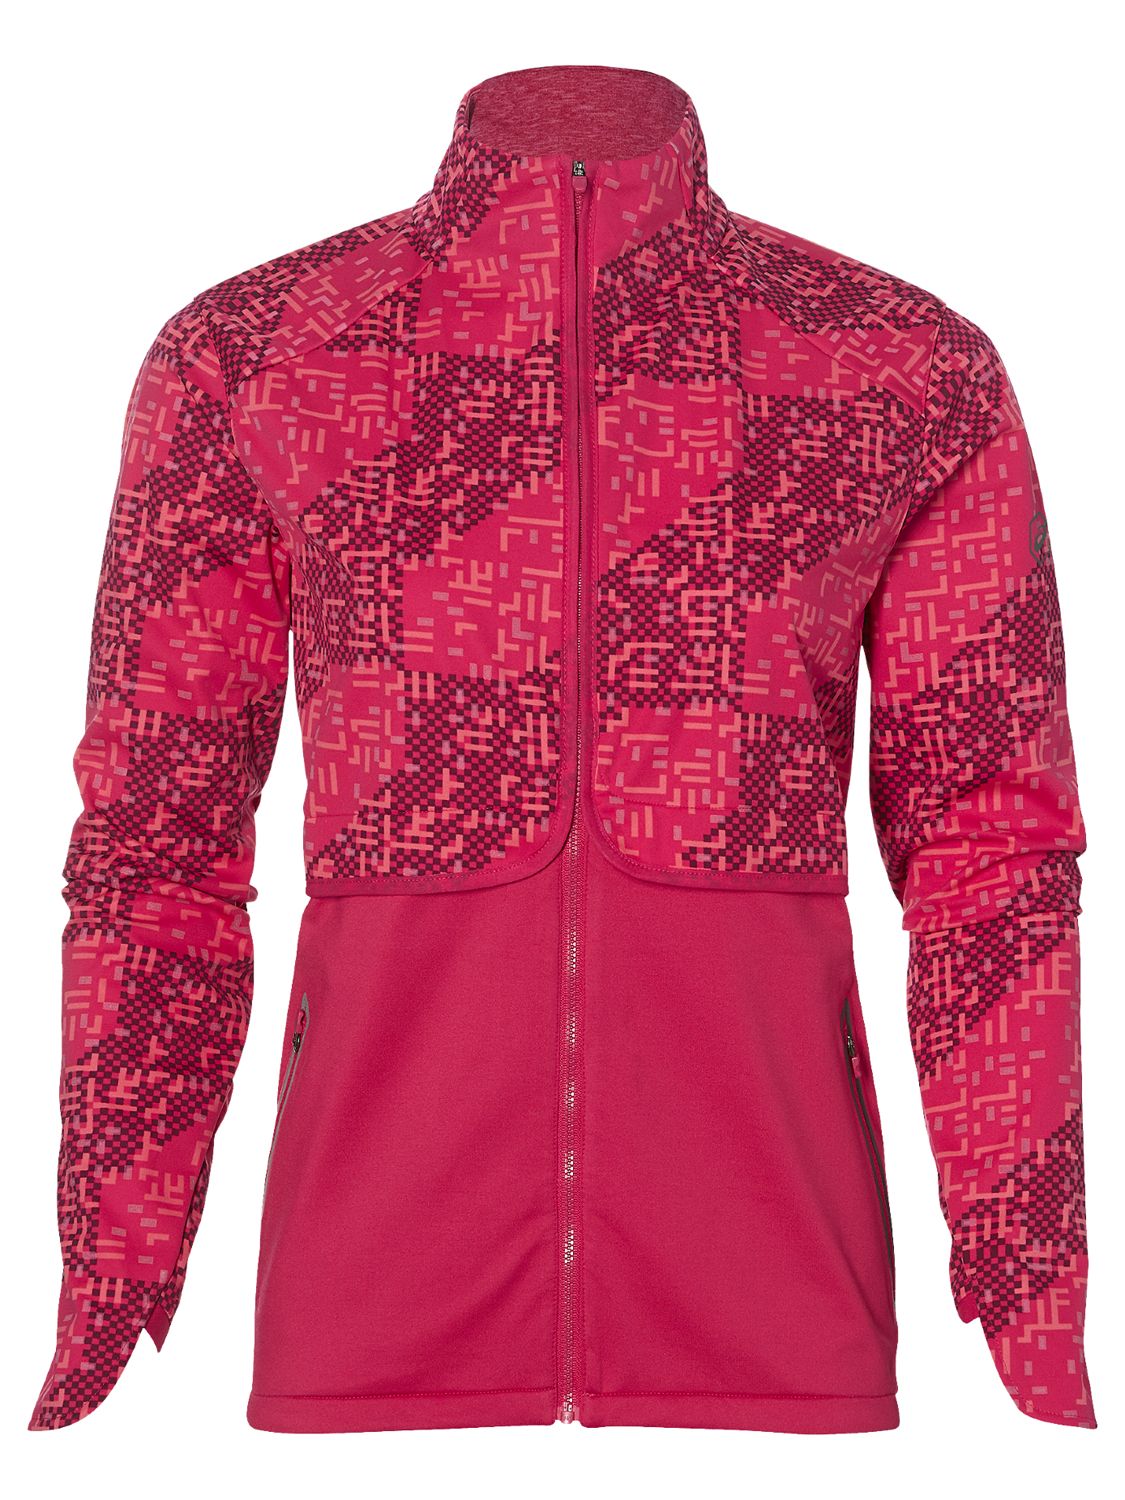 Asics Lite-Show Winter Running Jacket, Pink